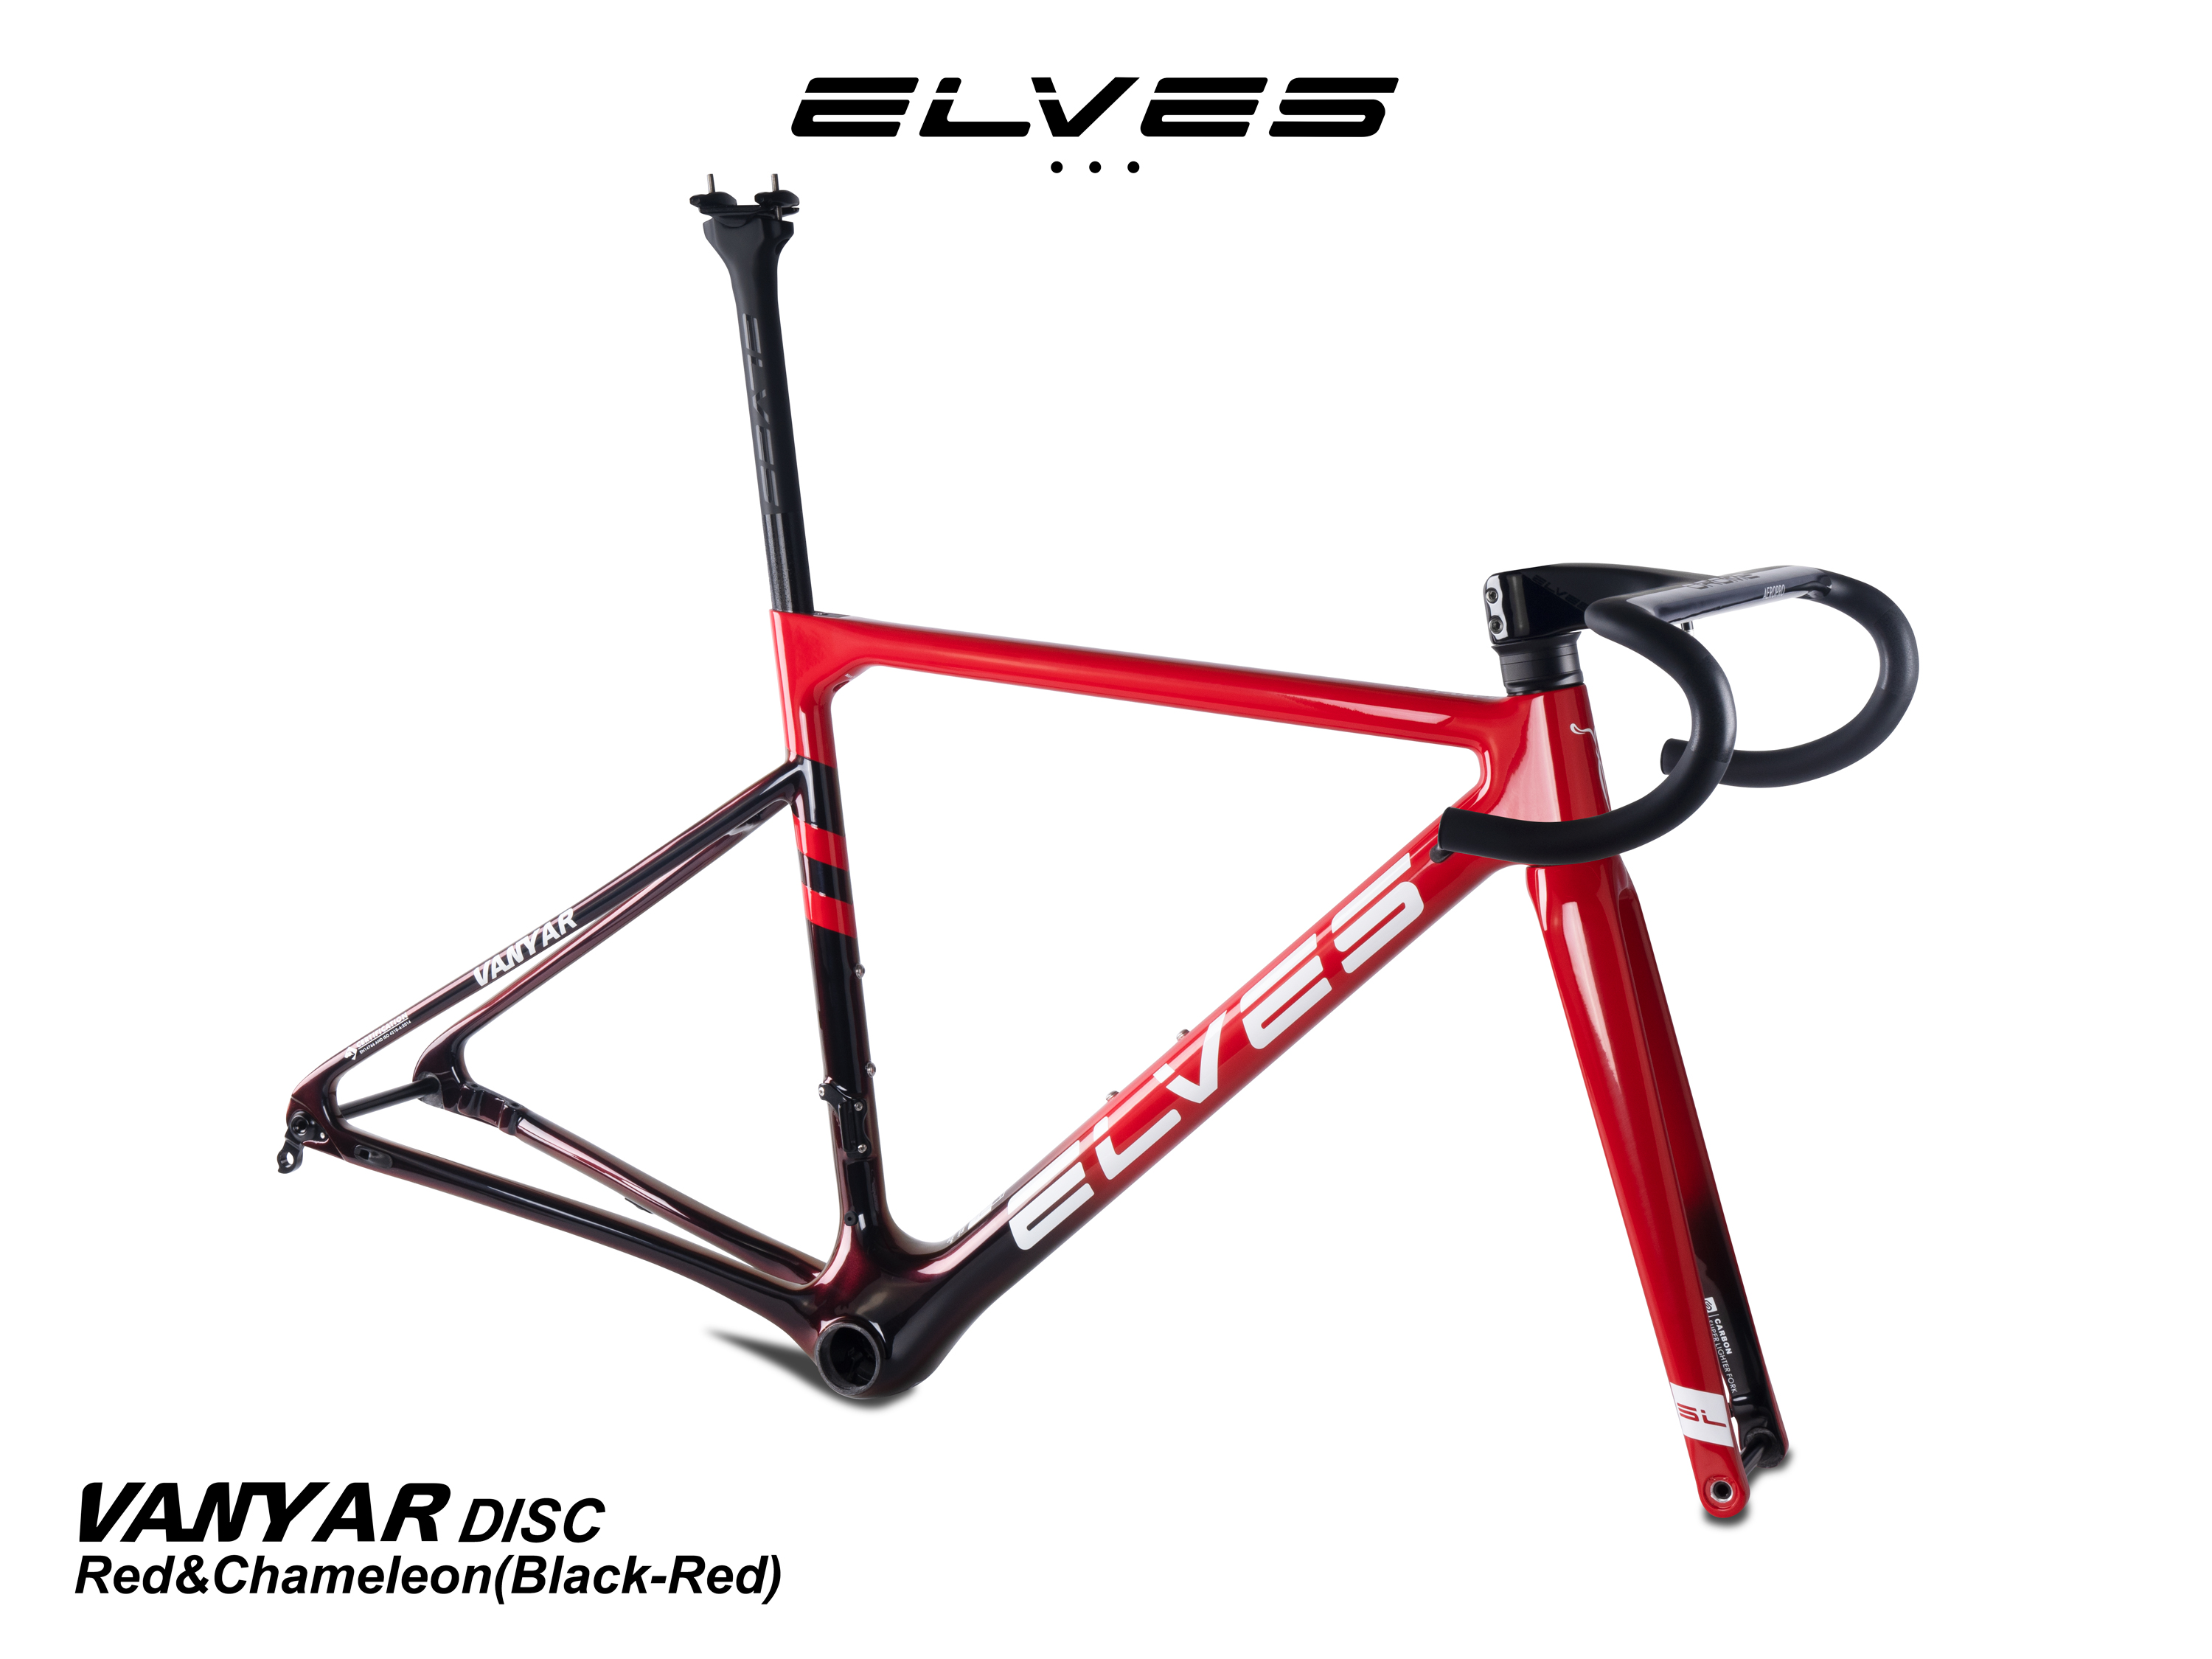 2022 NEW ELVES VANYAR DISC the Lightweight 760g road bike frame